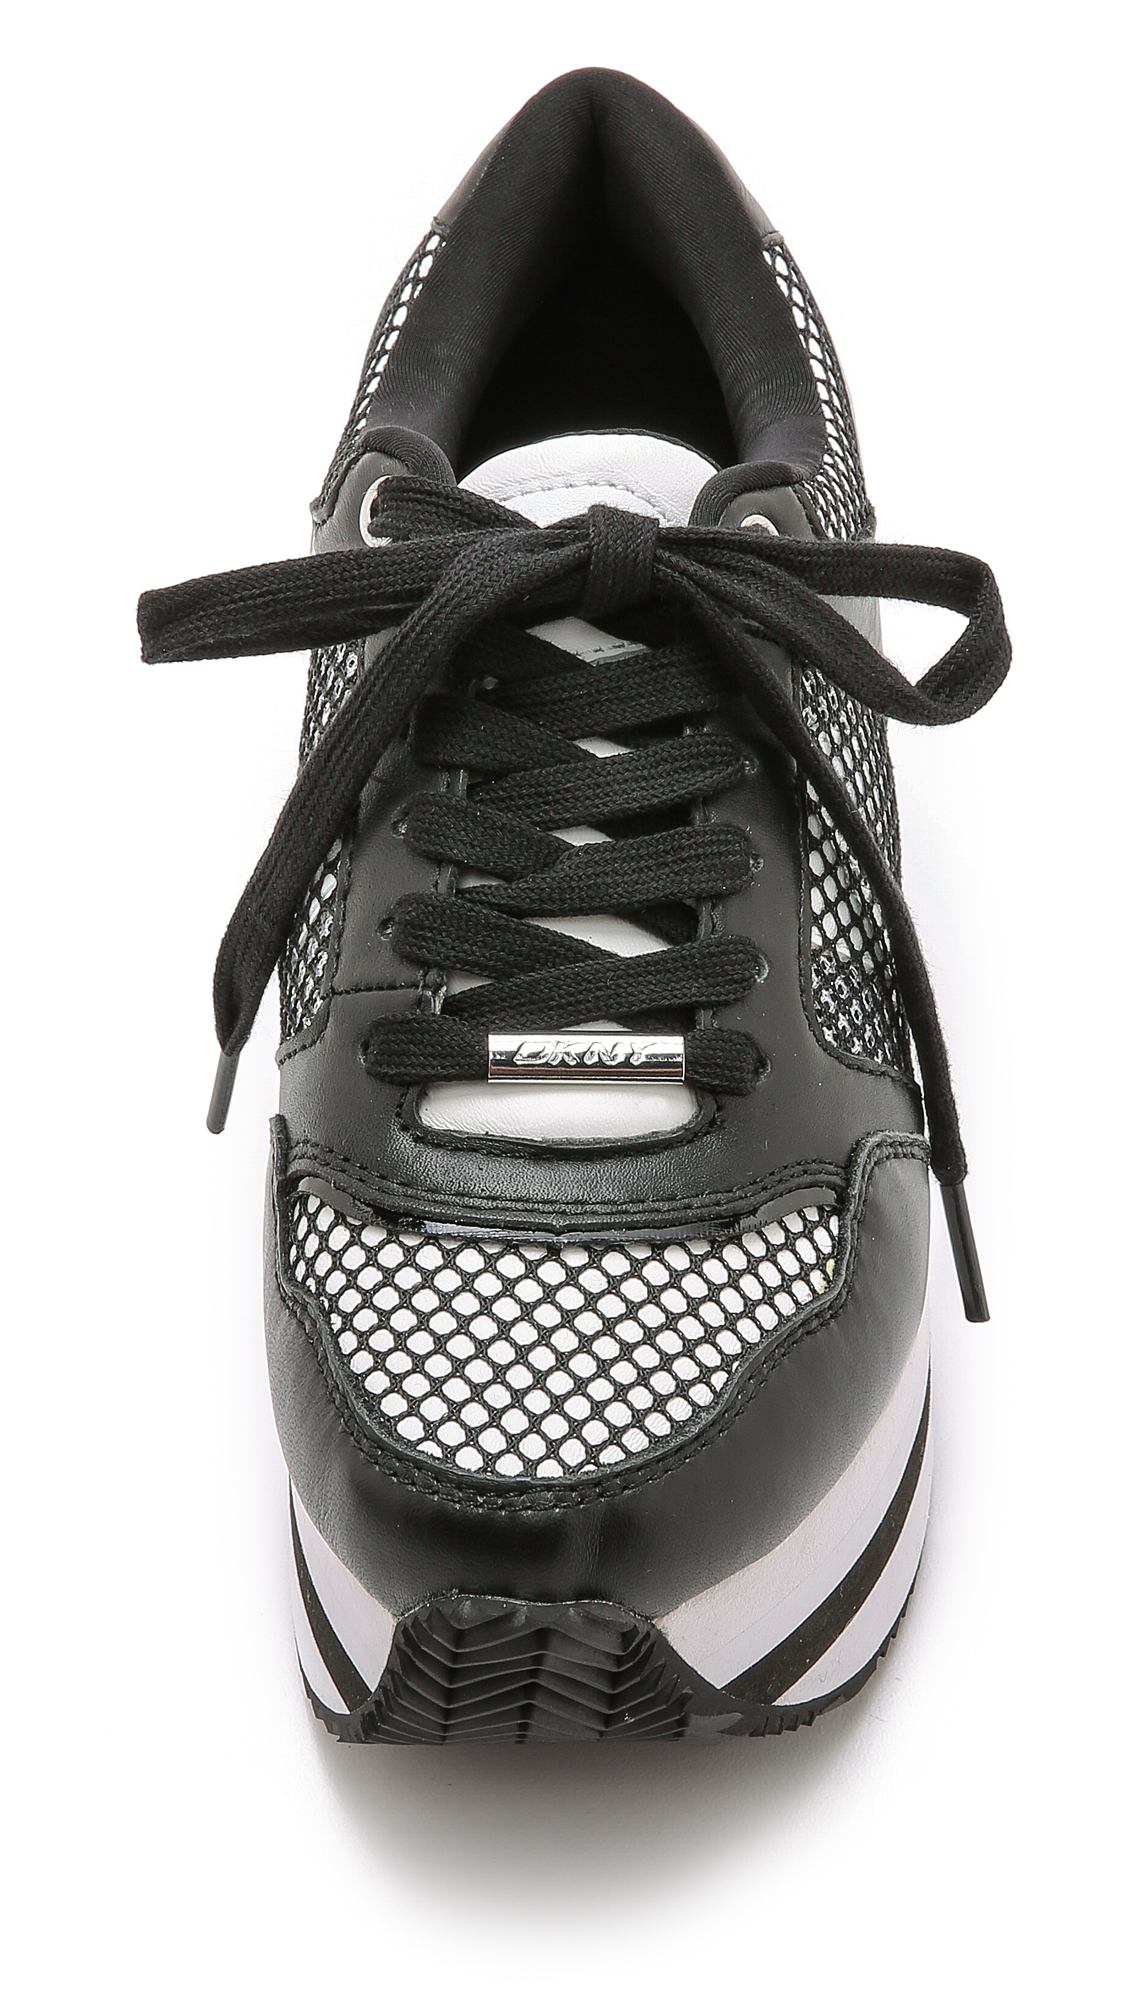 Lyst - Dkny Jill Platform Sneakers - White/black in White